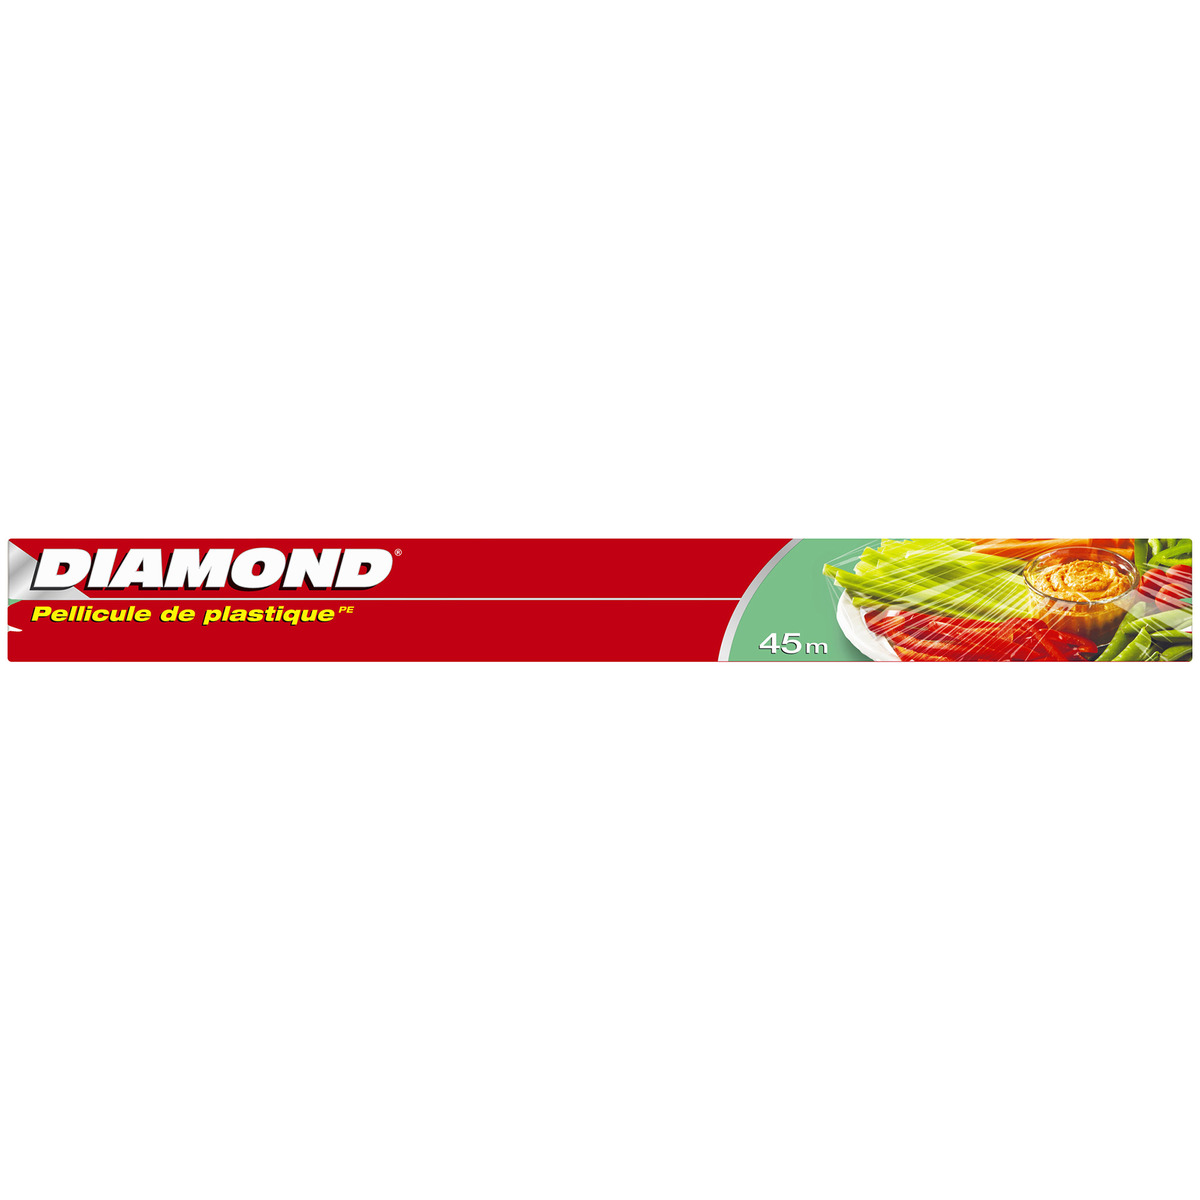 Diamond Cling Wrap 150 ft / 45 m